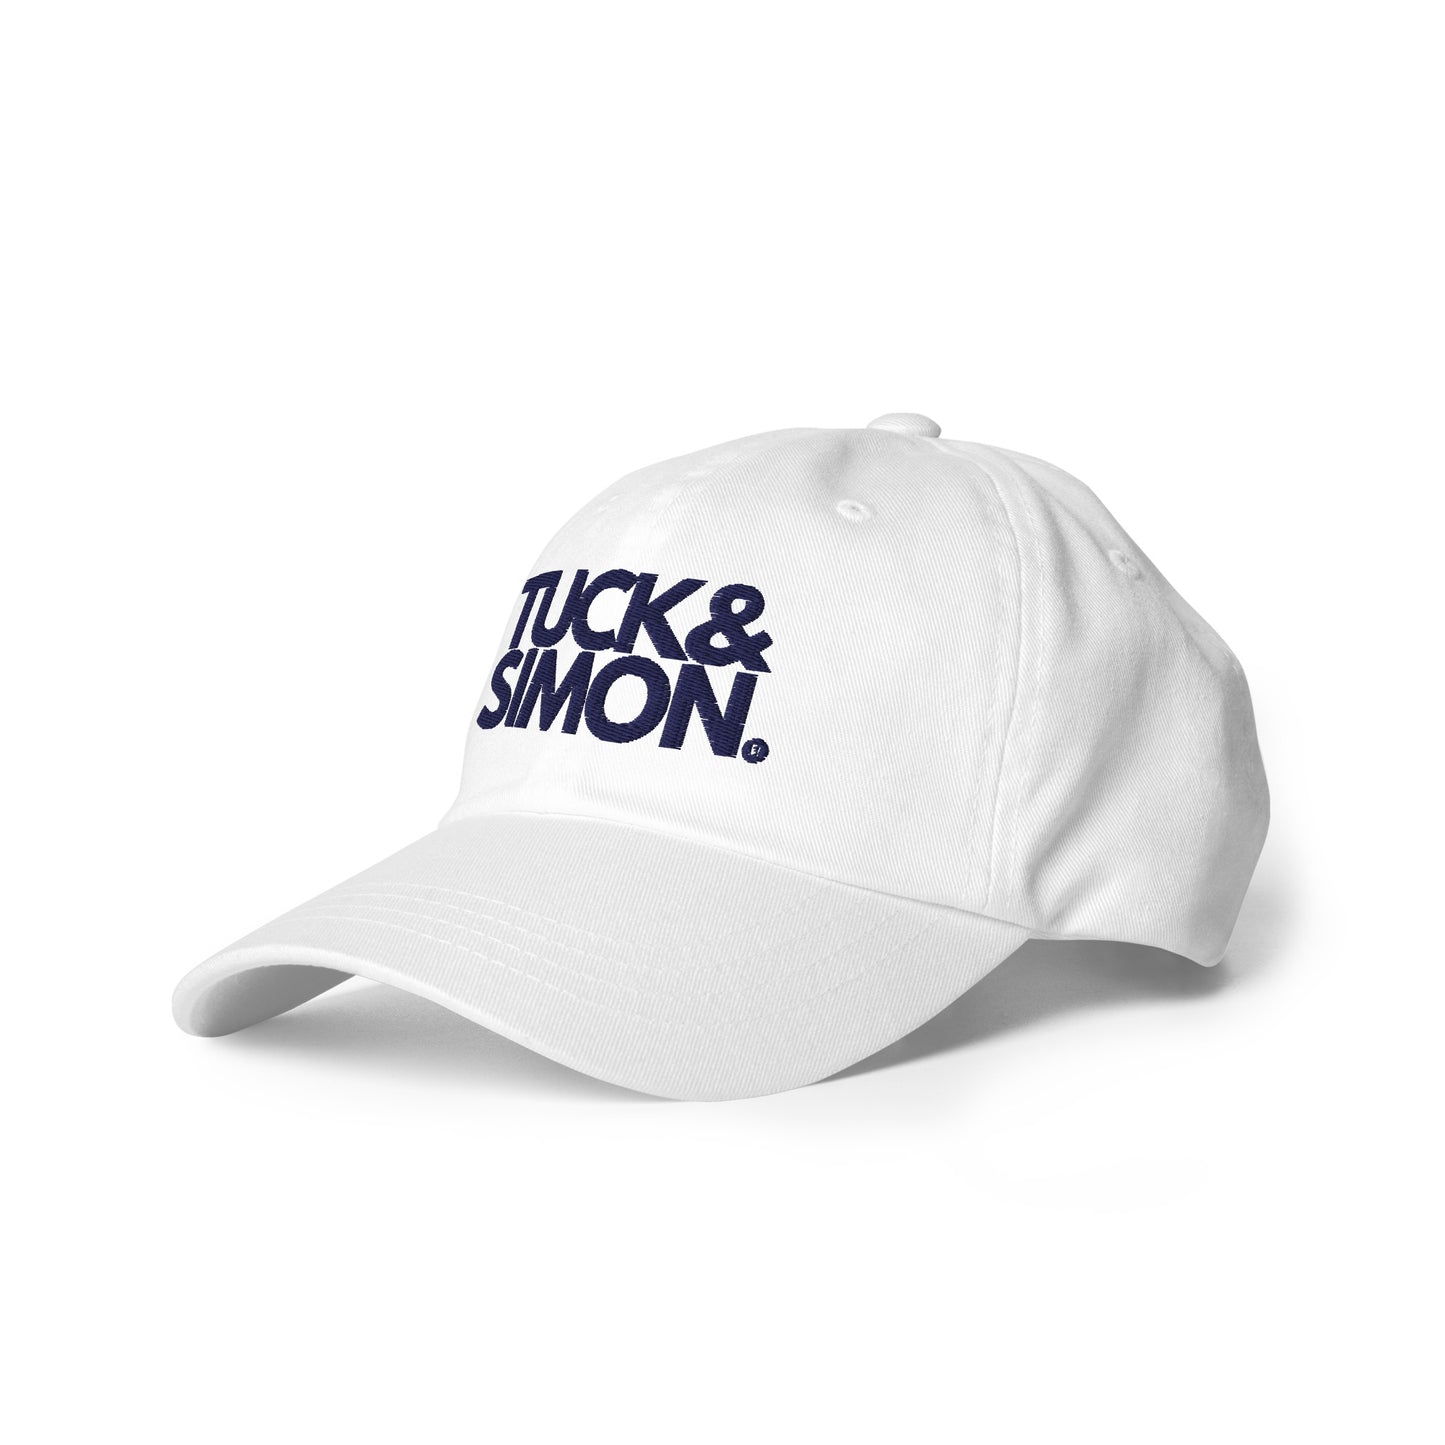 Tuck&Simon Chino Cotton Twill Dad Hat